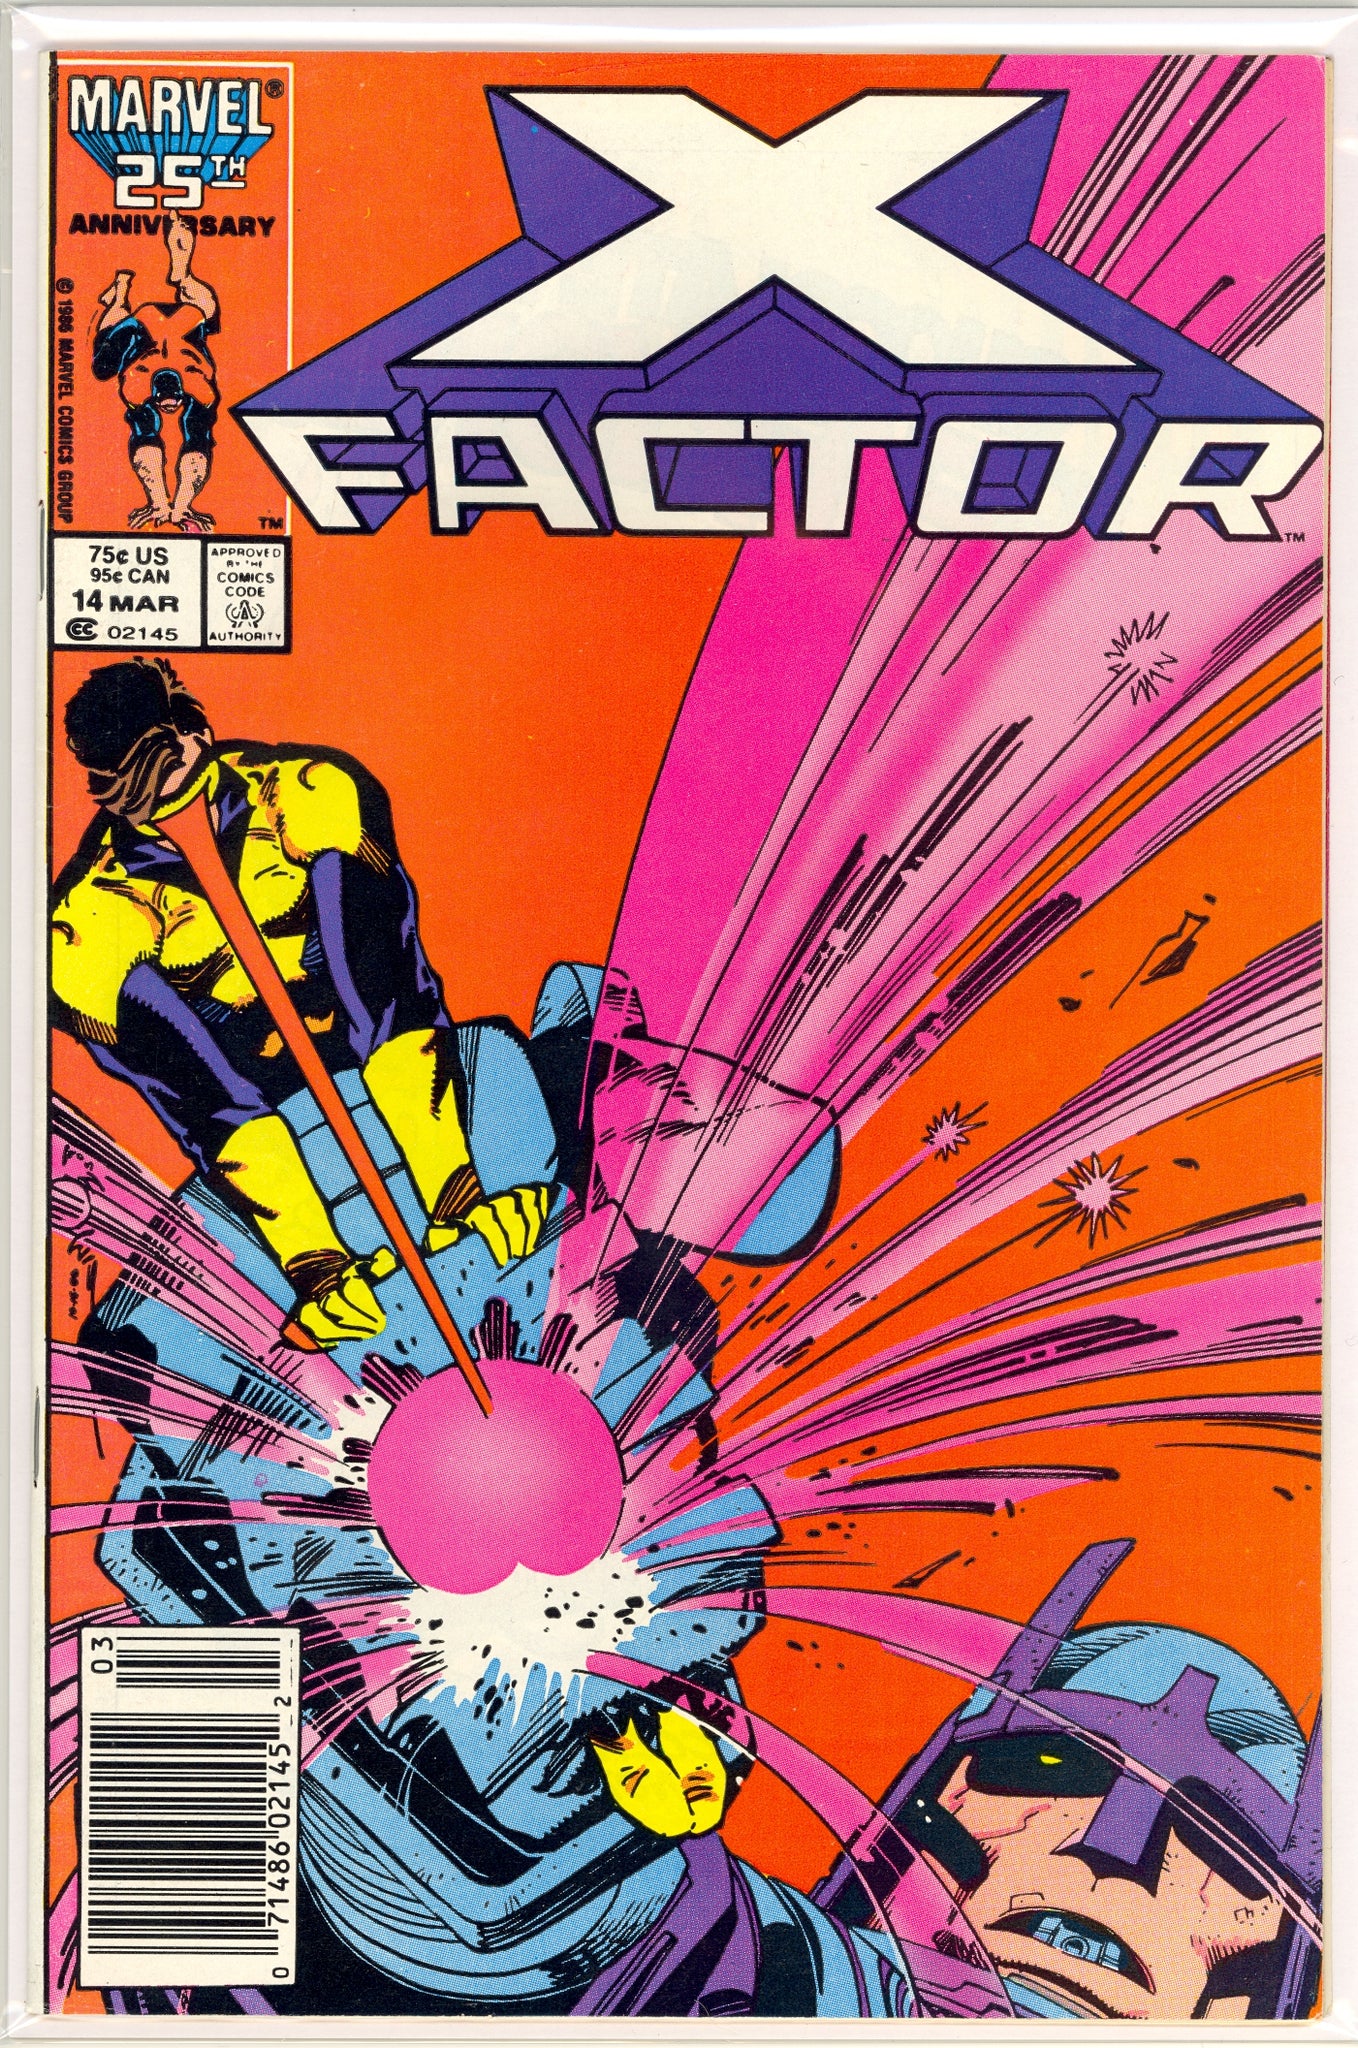 X-Factor #14 (1986) Mark Jewelers newsstand variant